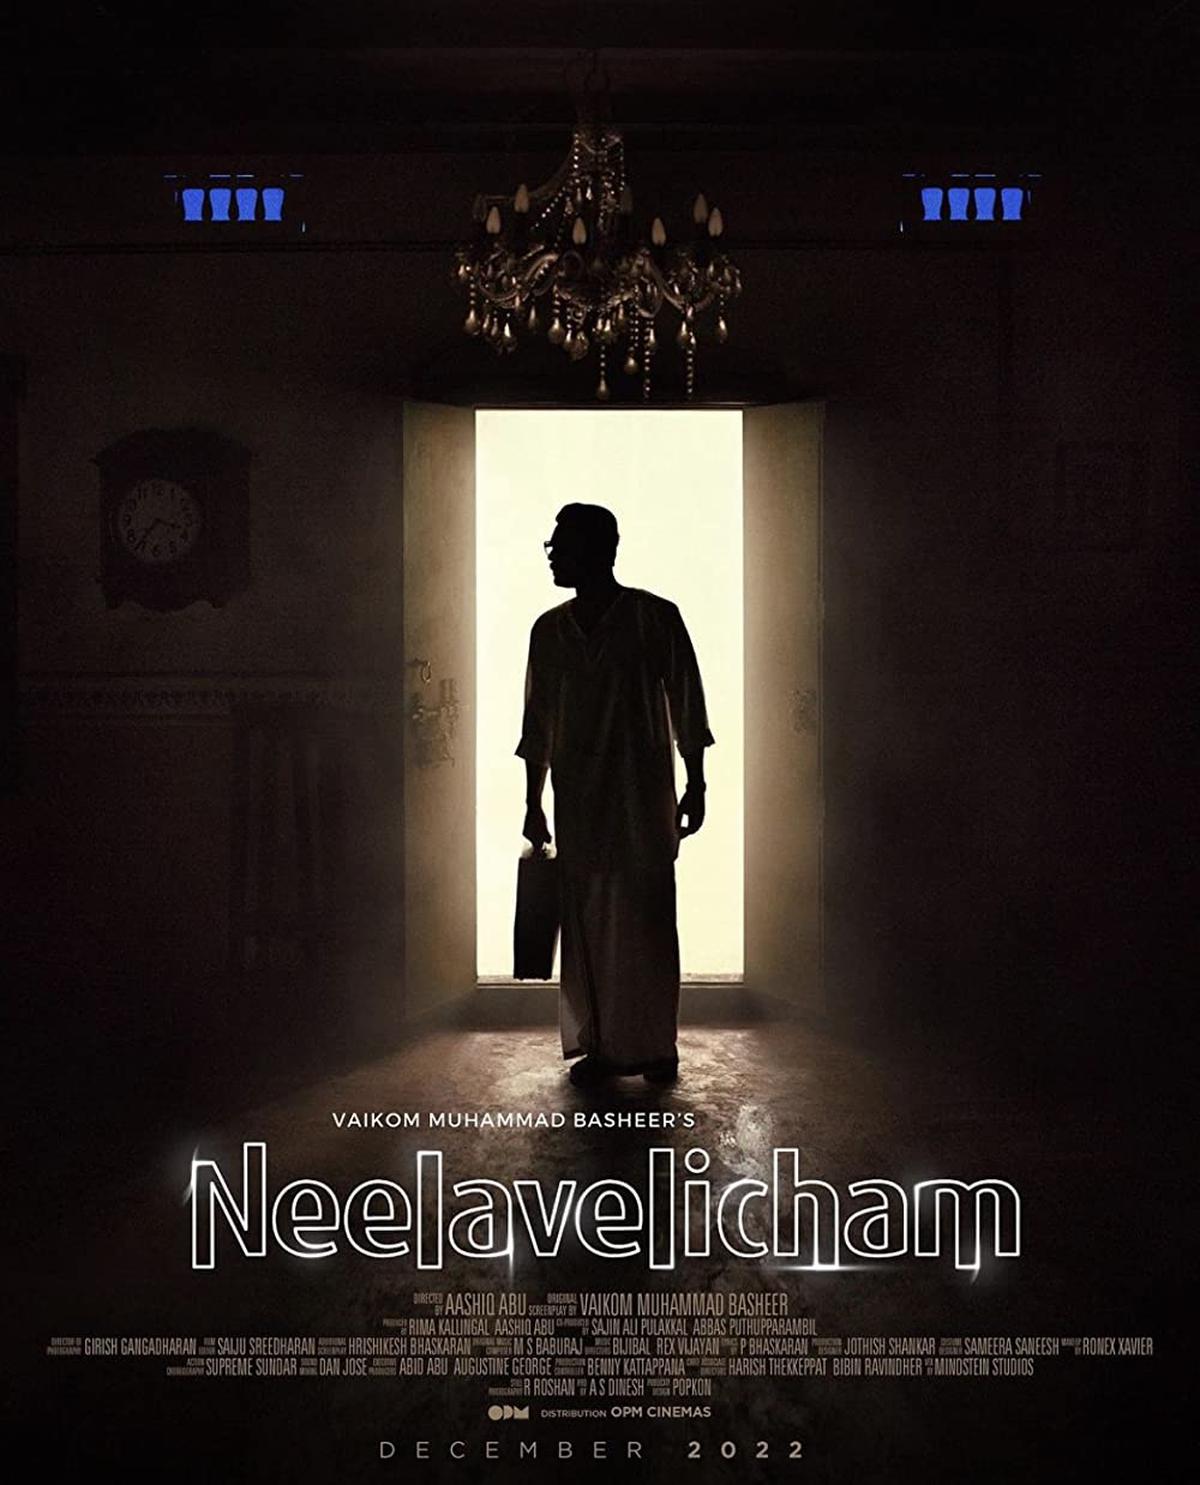 Poster of Aashiq Abu’s movie ‘Neelavelicham’, based on Vaikom Muhammed Basheer’s short story of the same name, starring Tovino Thomas